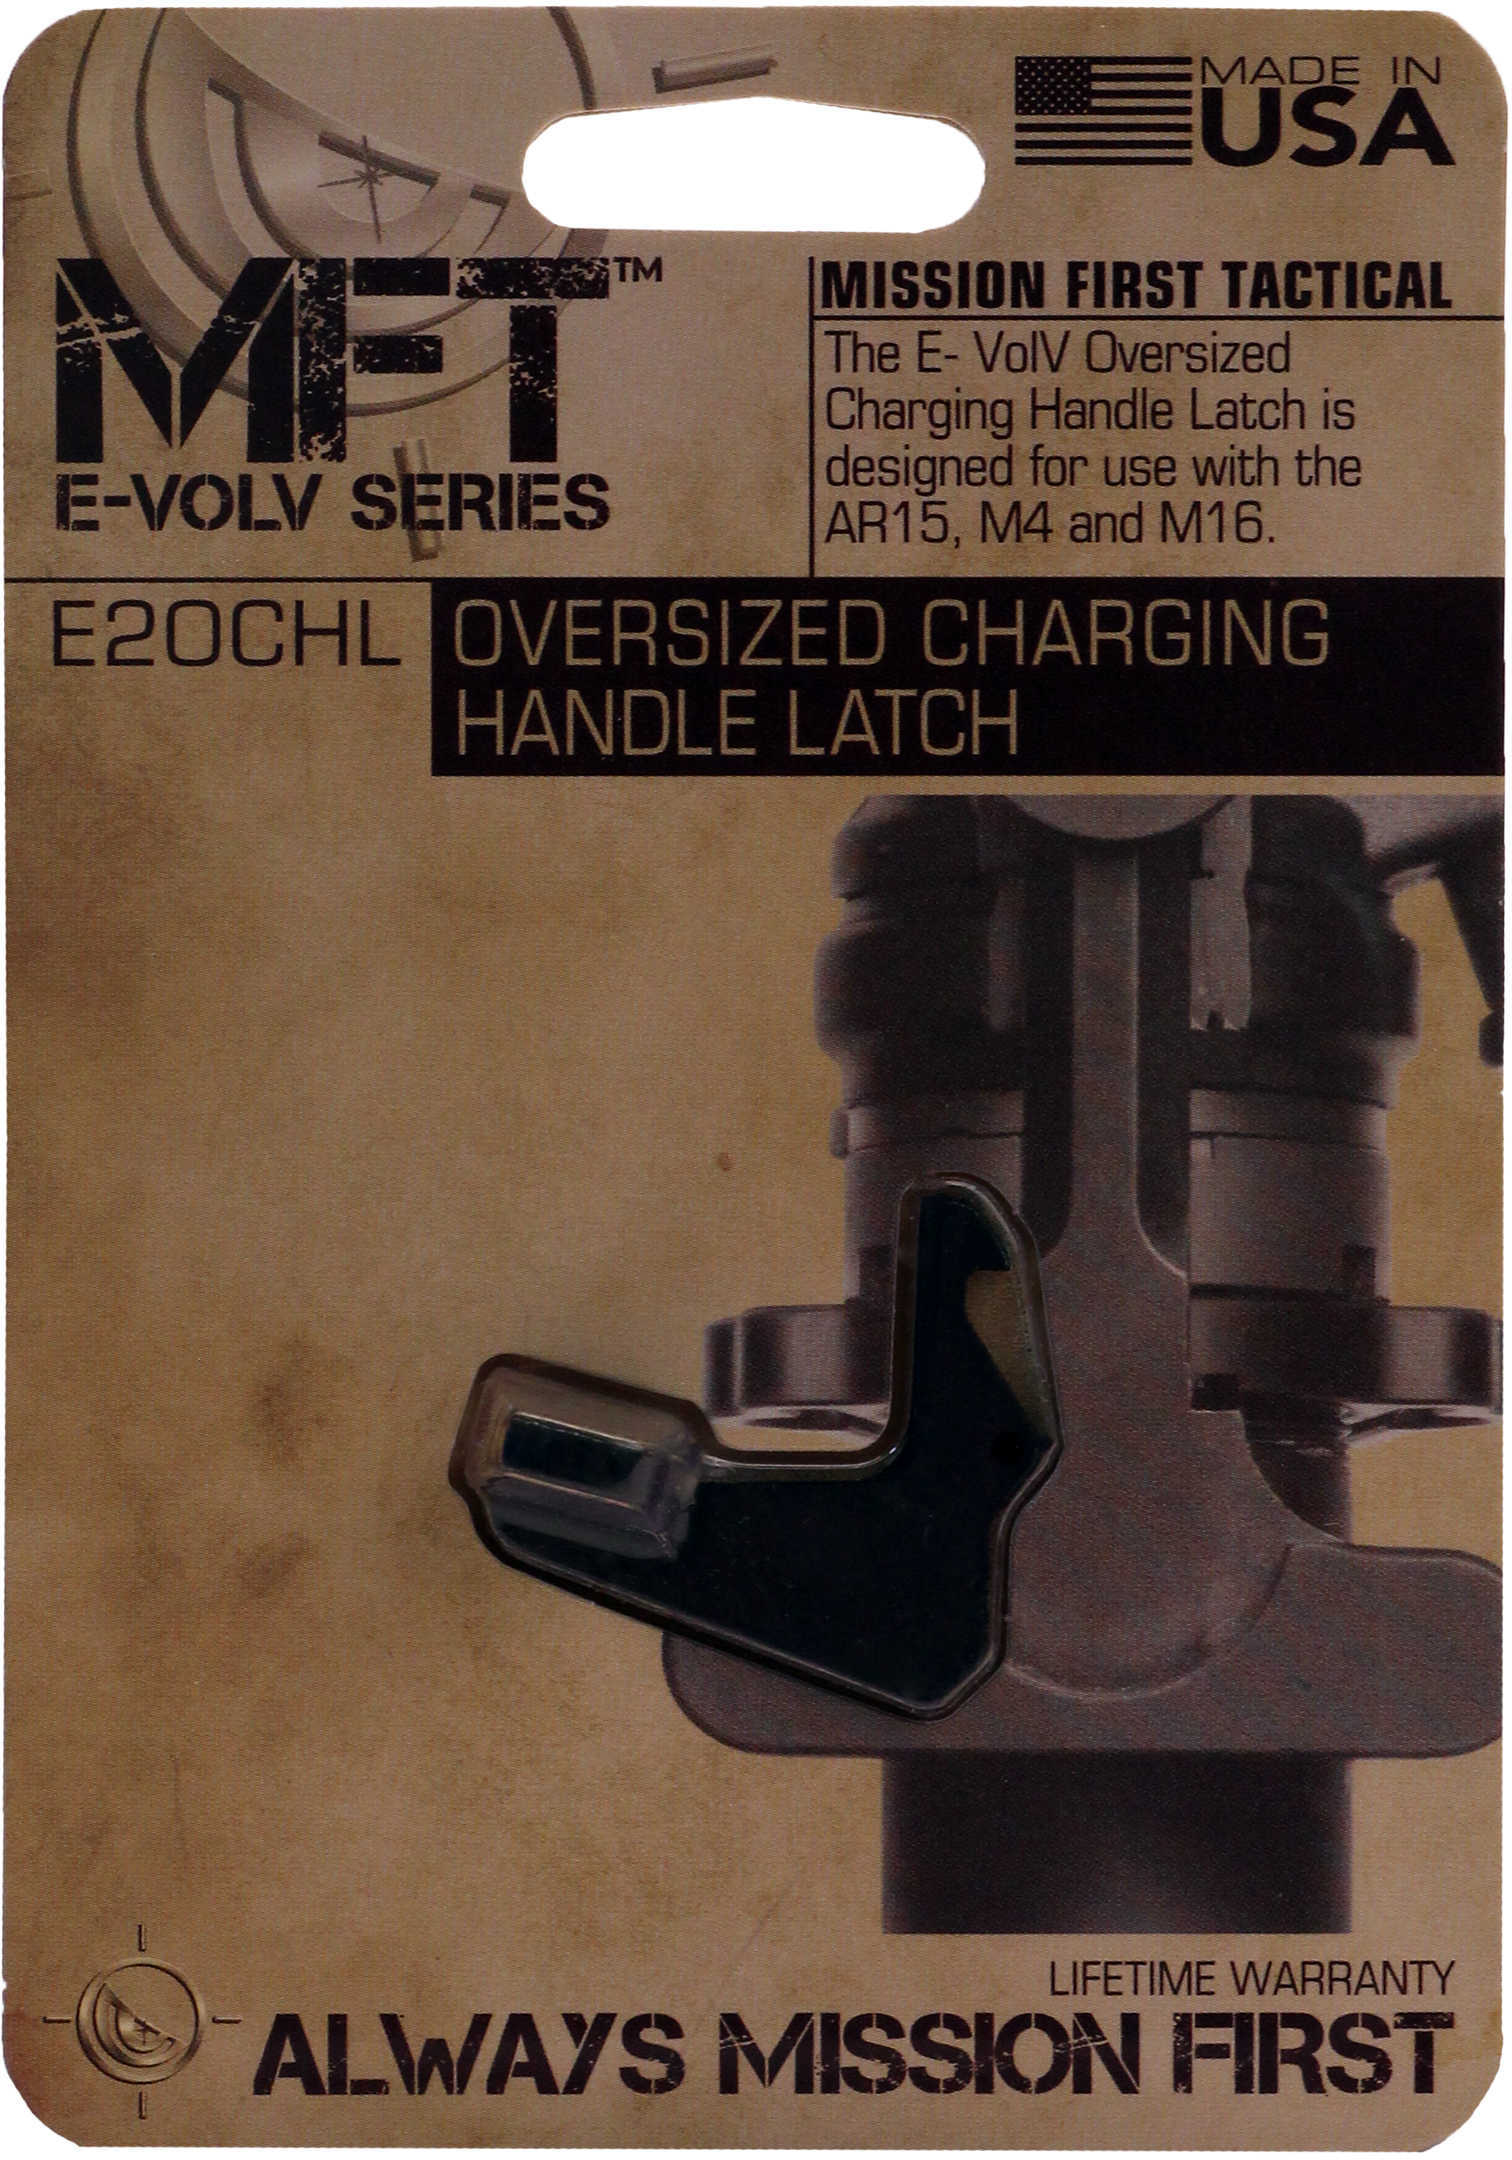 AR-15 E-VOLV Charging Handle Latch Oversized